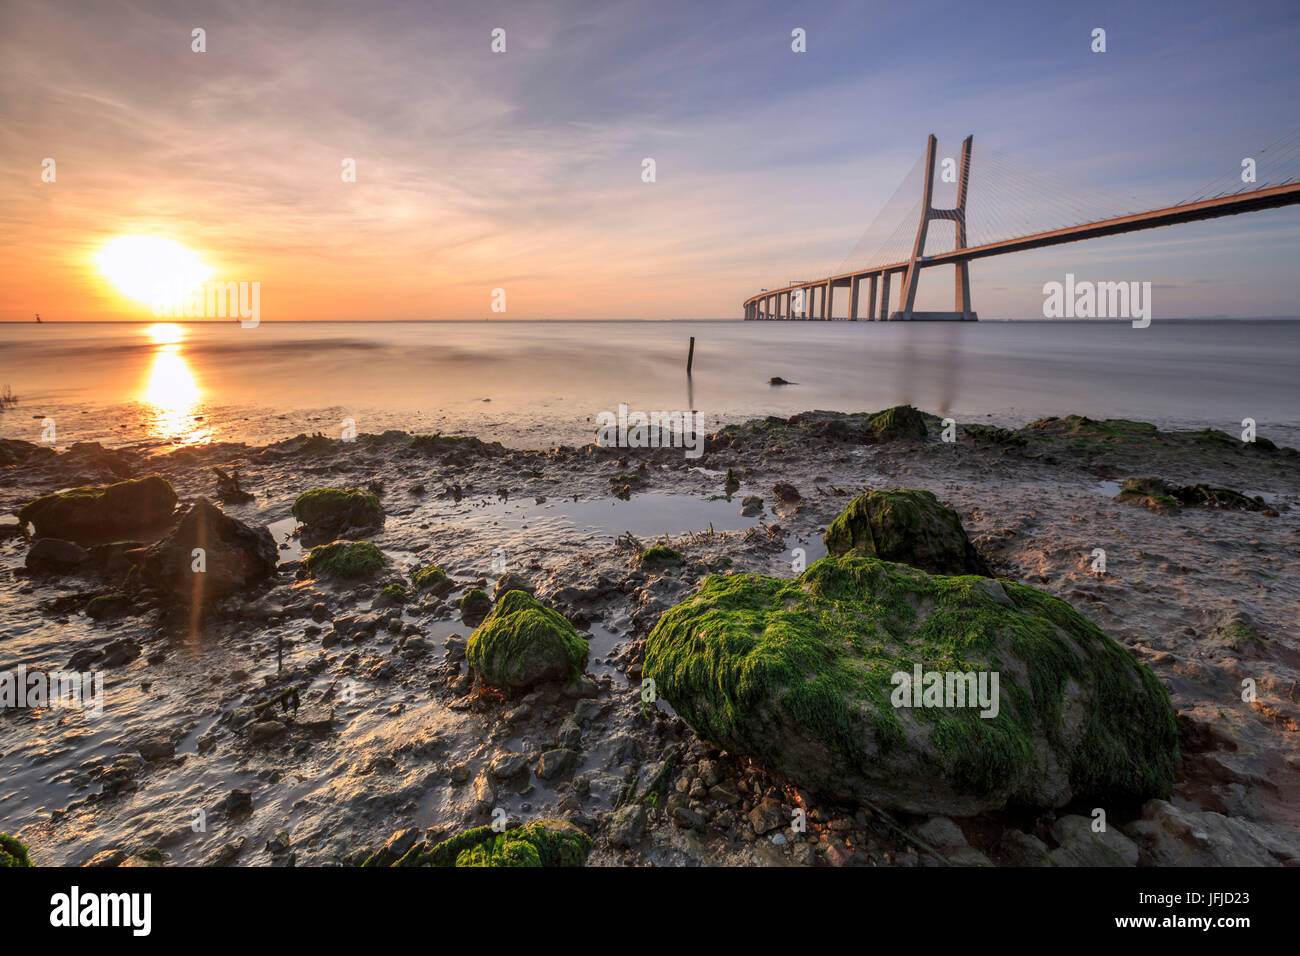 The sun rises on the Vasco da Gama Bridge that spans the Tagus River in Parque das Nações Lisbon Portugal Europe Stock Photo